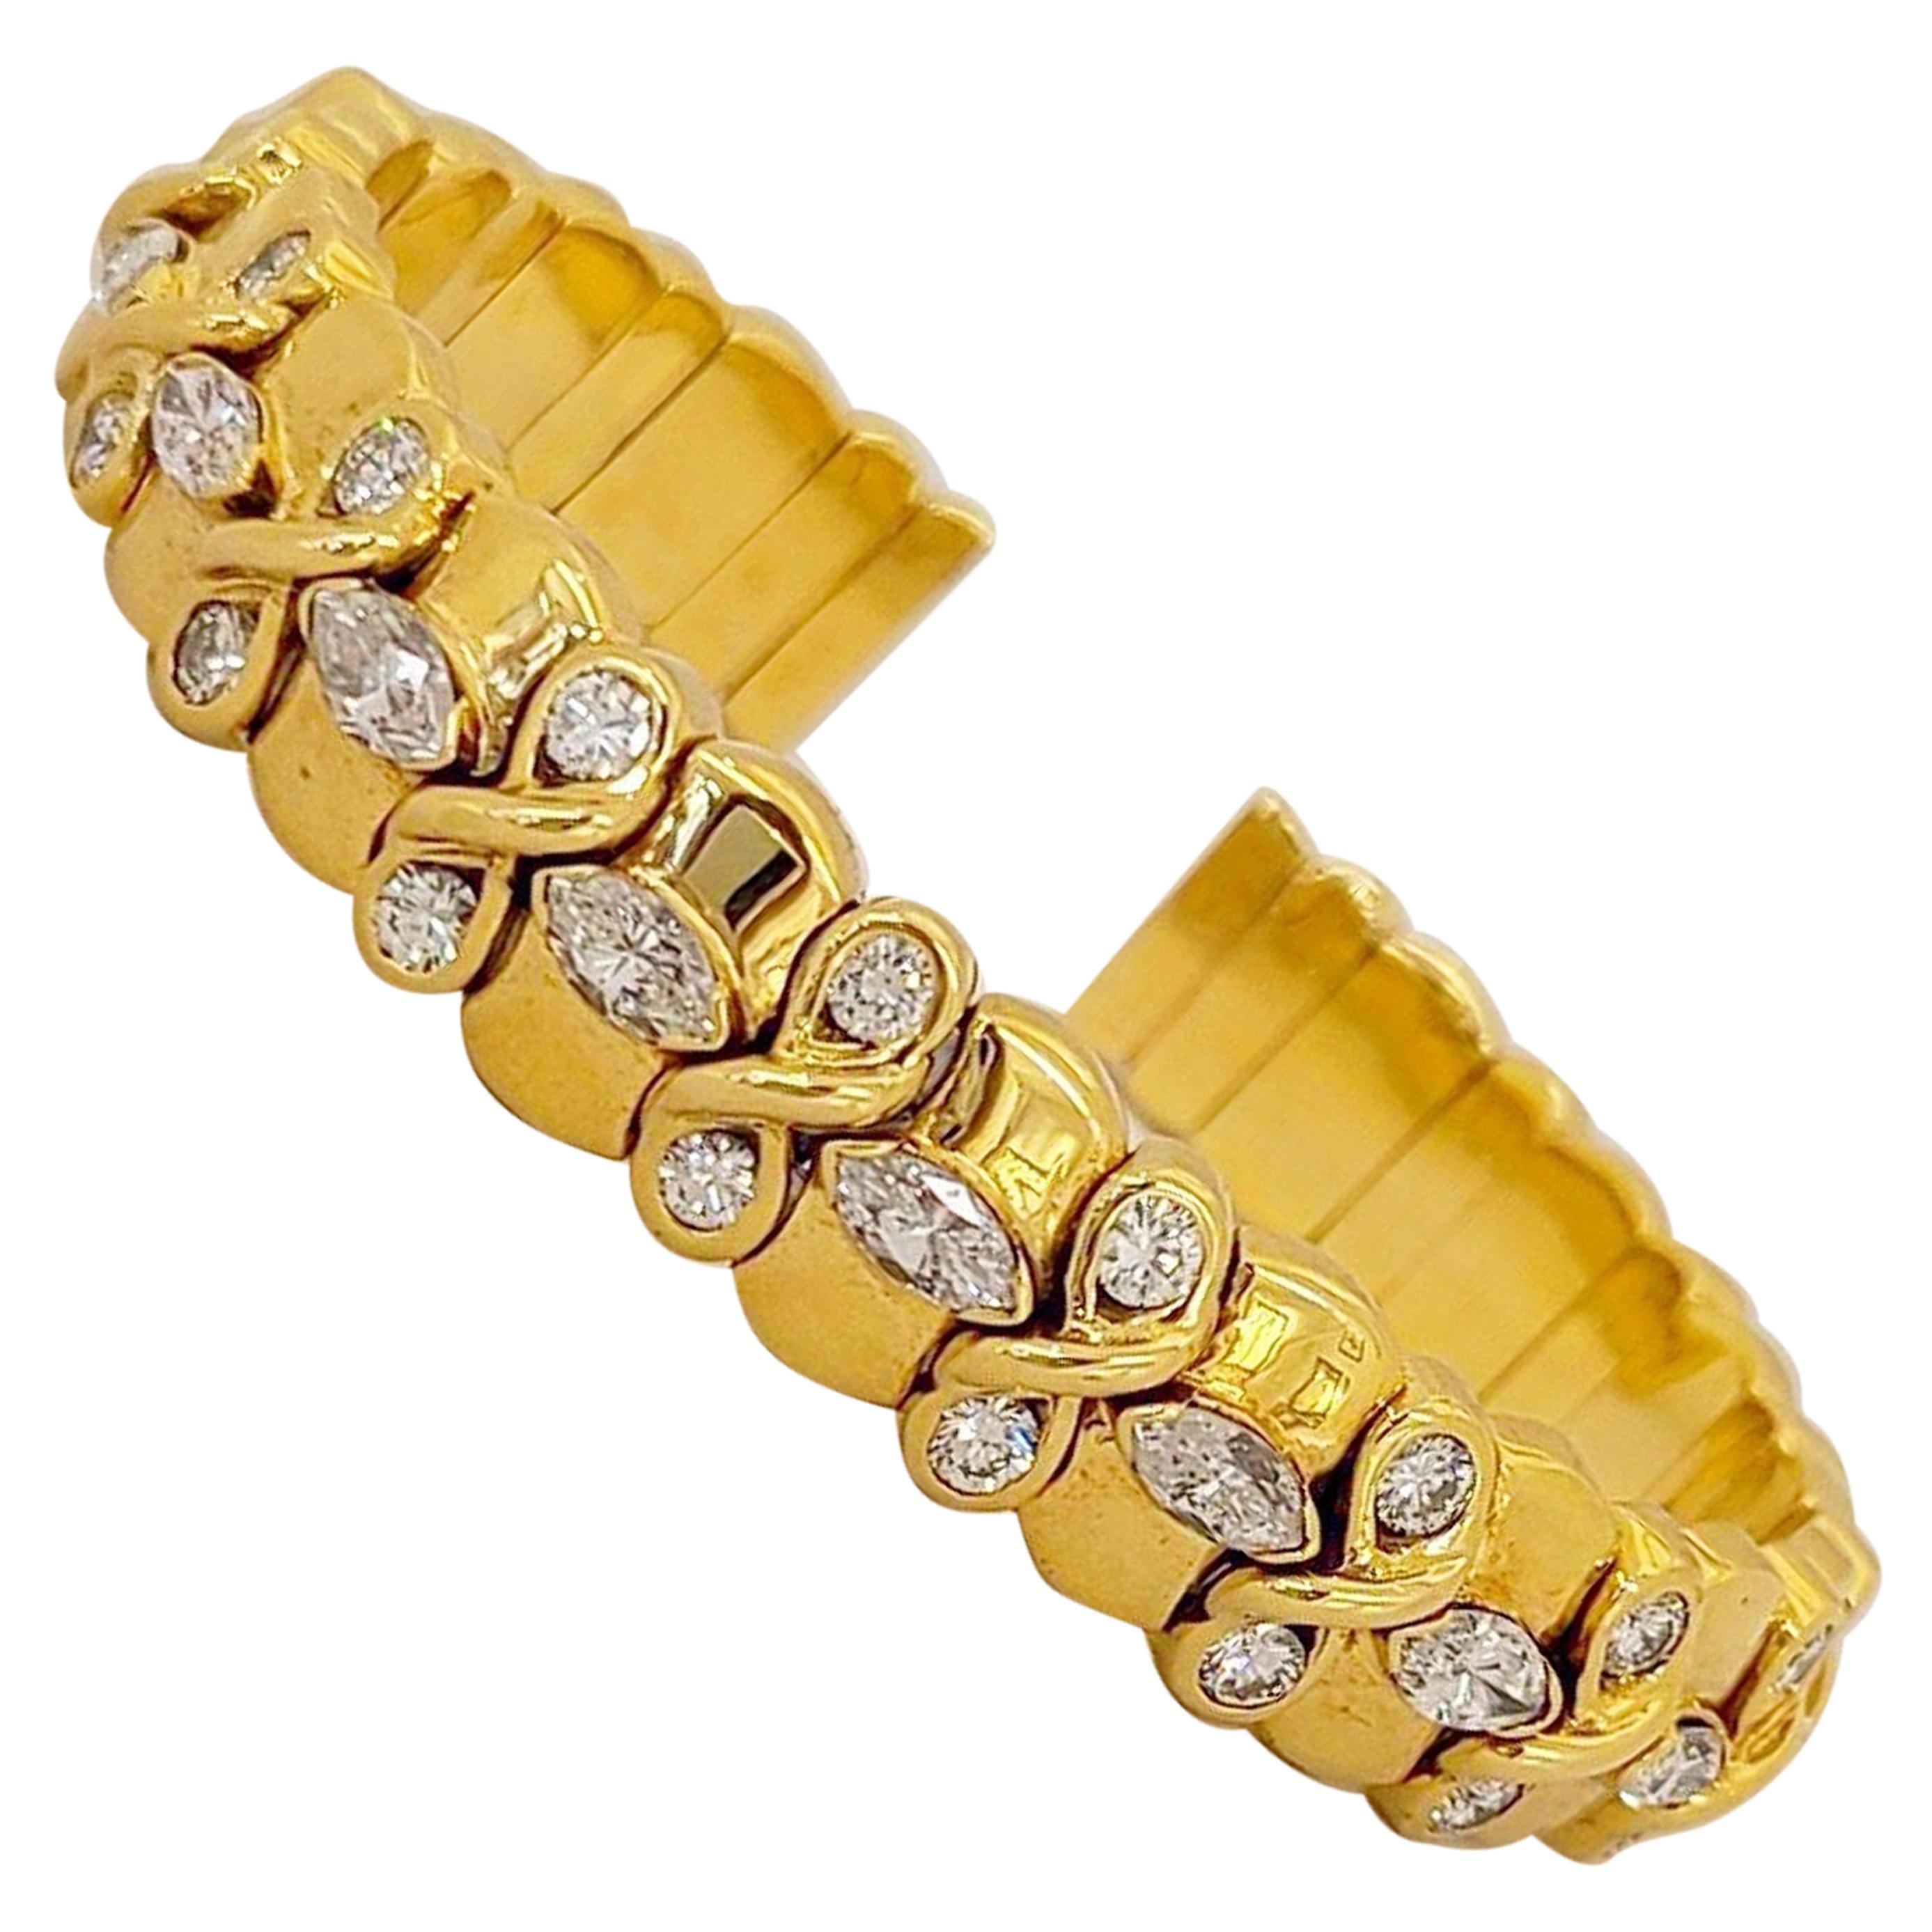 NYC 18 Karat Yellow Gold Cuff Bracelet with 3.81 Carat Diamonds